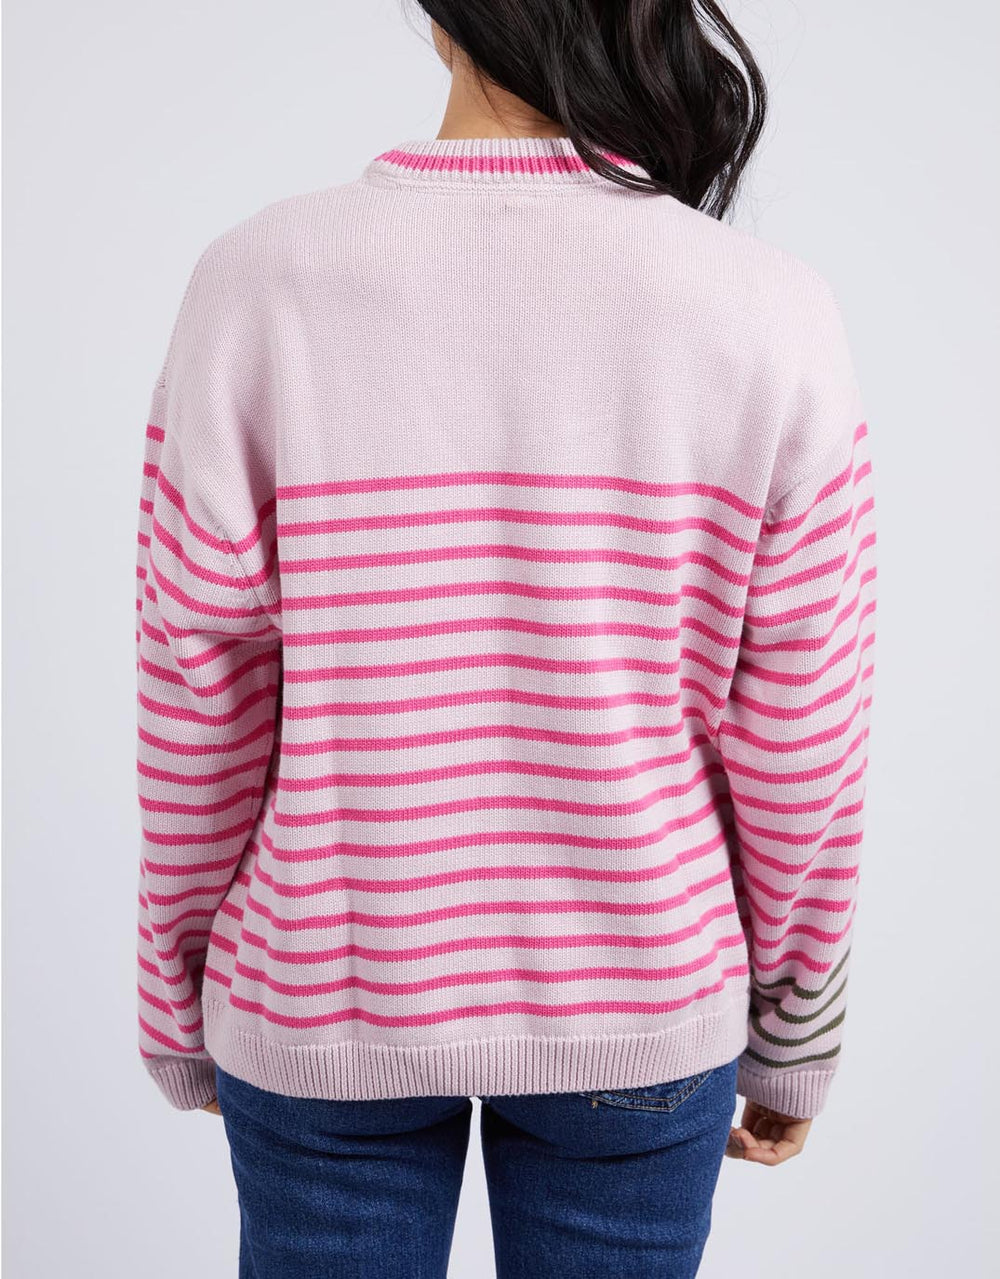 elm-penny-stripe-knit-powder-pink-shocking-pink-stripe-womens-clothing